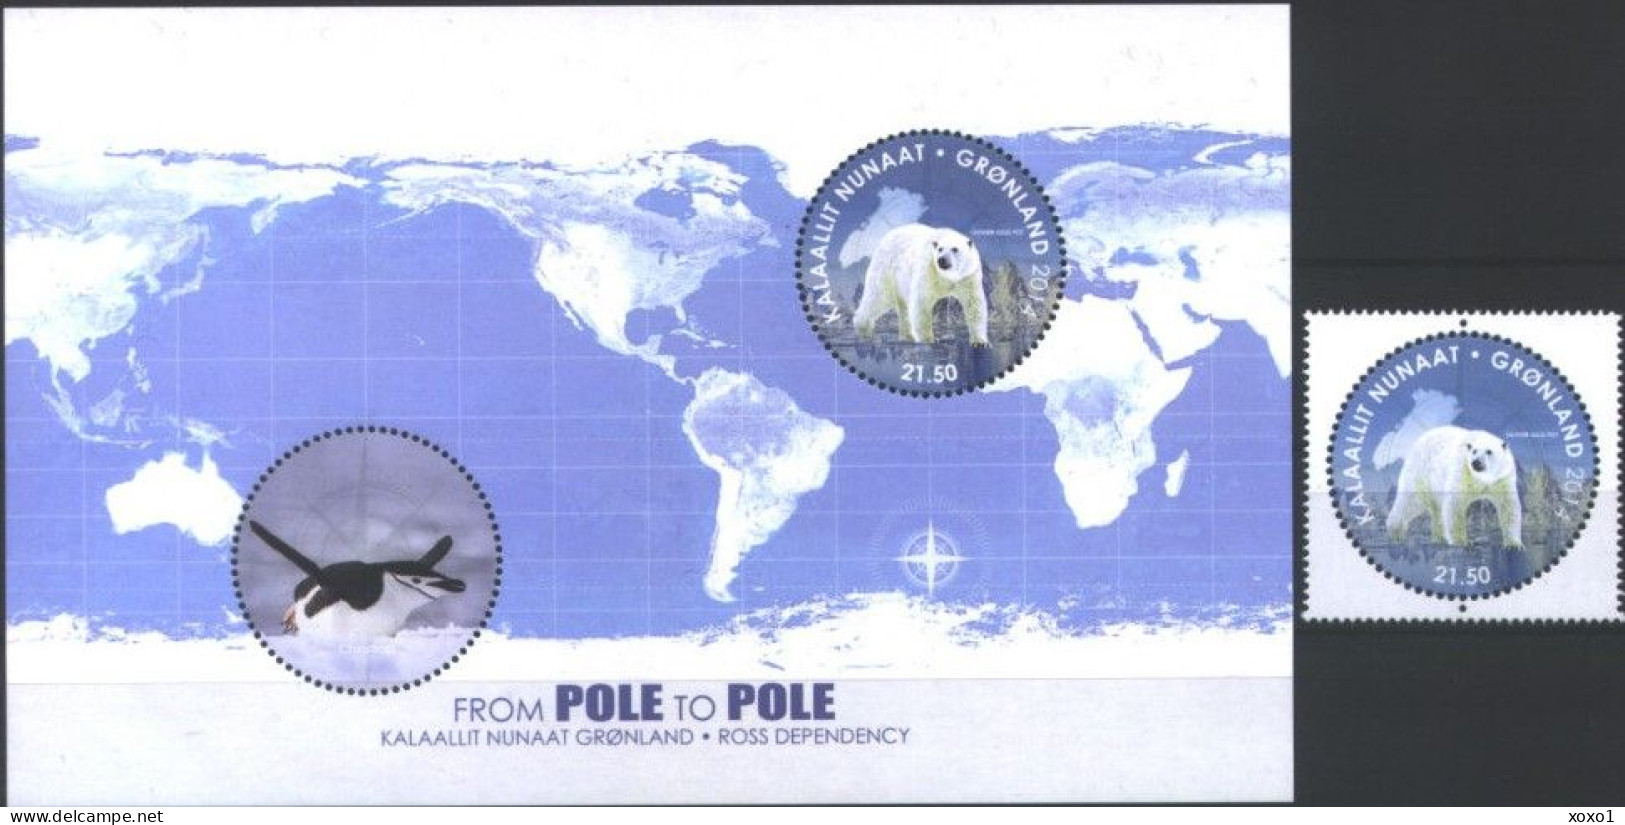 Greenland 2014 MiNr. 680 (Block 70) Dänemark Grönland Ross Antarctica Pole Bears BIRDS Penguins 1v + S\sh MNH** 13.00 € - Arctische Fauna